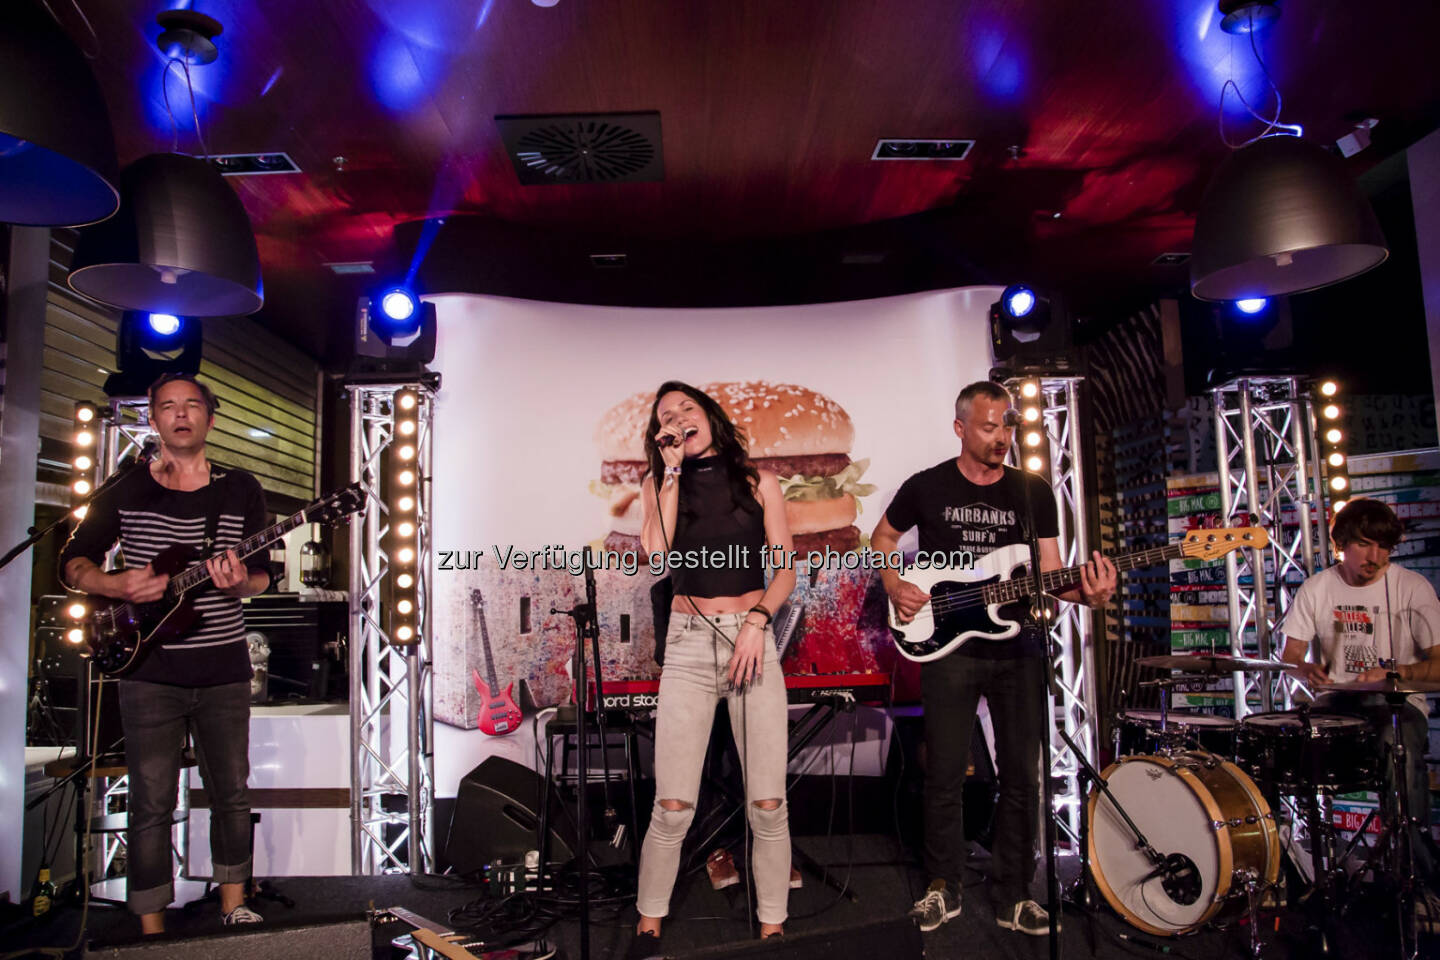 Kathi Kallauch gab ein exklusives Konzert im McDonald’s Restaurant Graz-Seiersberg